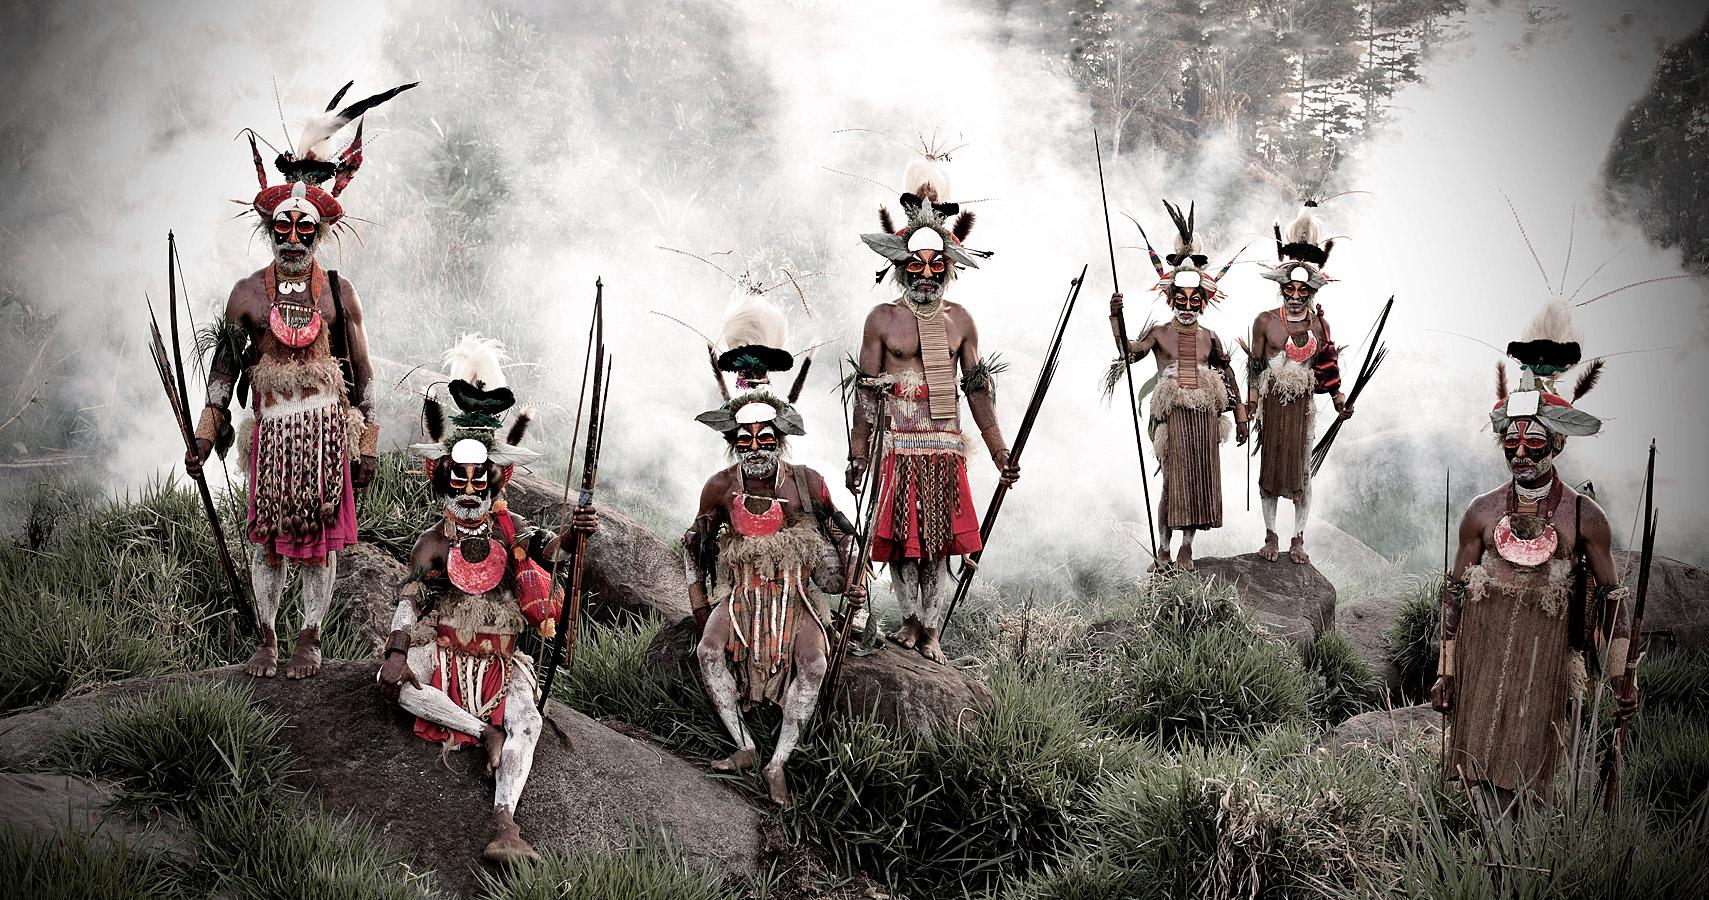 "XV 78 - Keke Kombea, Tande Mala, Lebosi Kupu, Mumburi Mupi, John Kundi, Menaja Koke, Stamm der Likekaipia - Dorf Ponowi, Jalibu-Berge, Westliches Hochland - Papua-Neuguinea, 2010

Papua war der Ausgangspunkt unserer zweimonatigen Reise durch